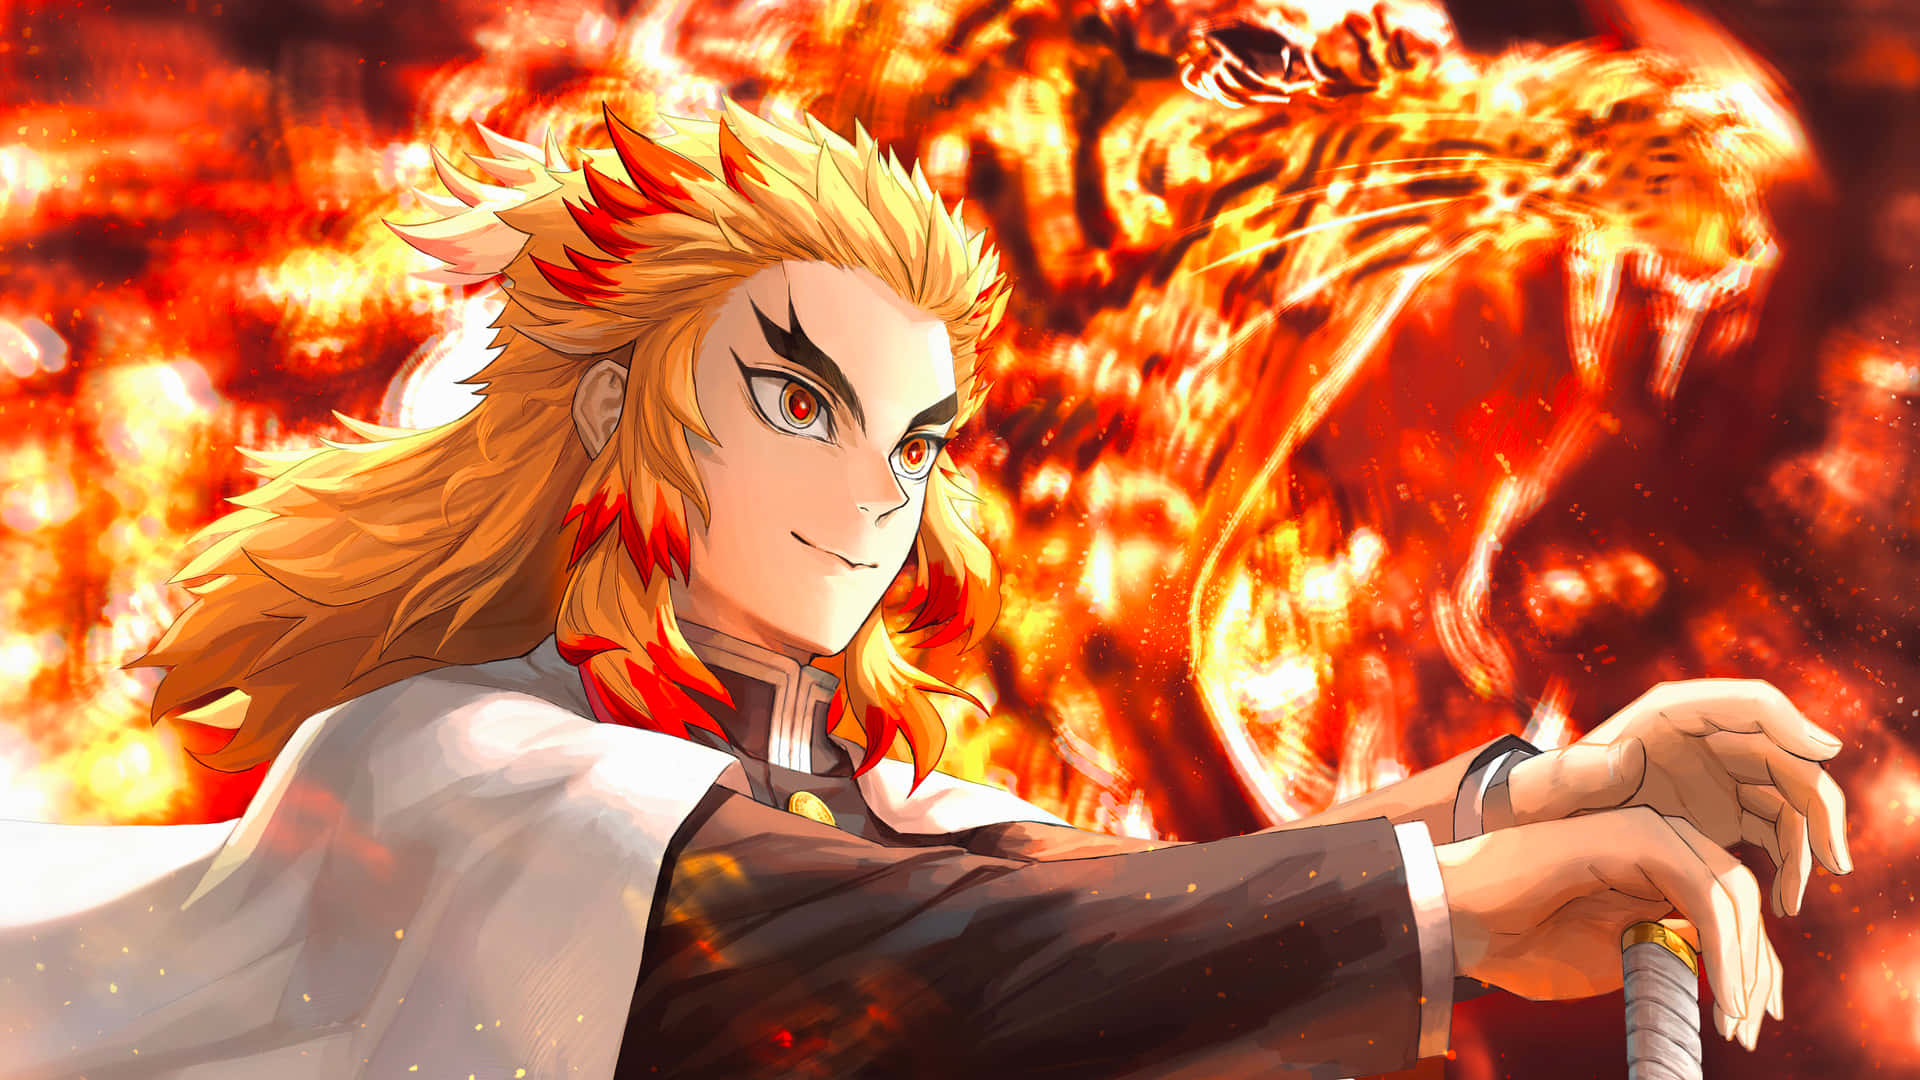 Rengoku, the Flame Hashira, in a powerful battle stance